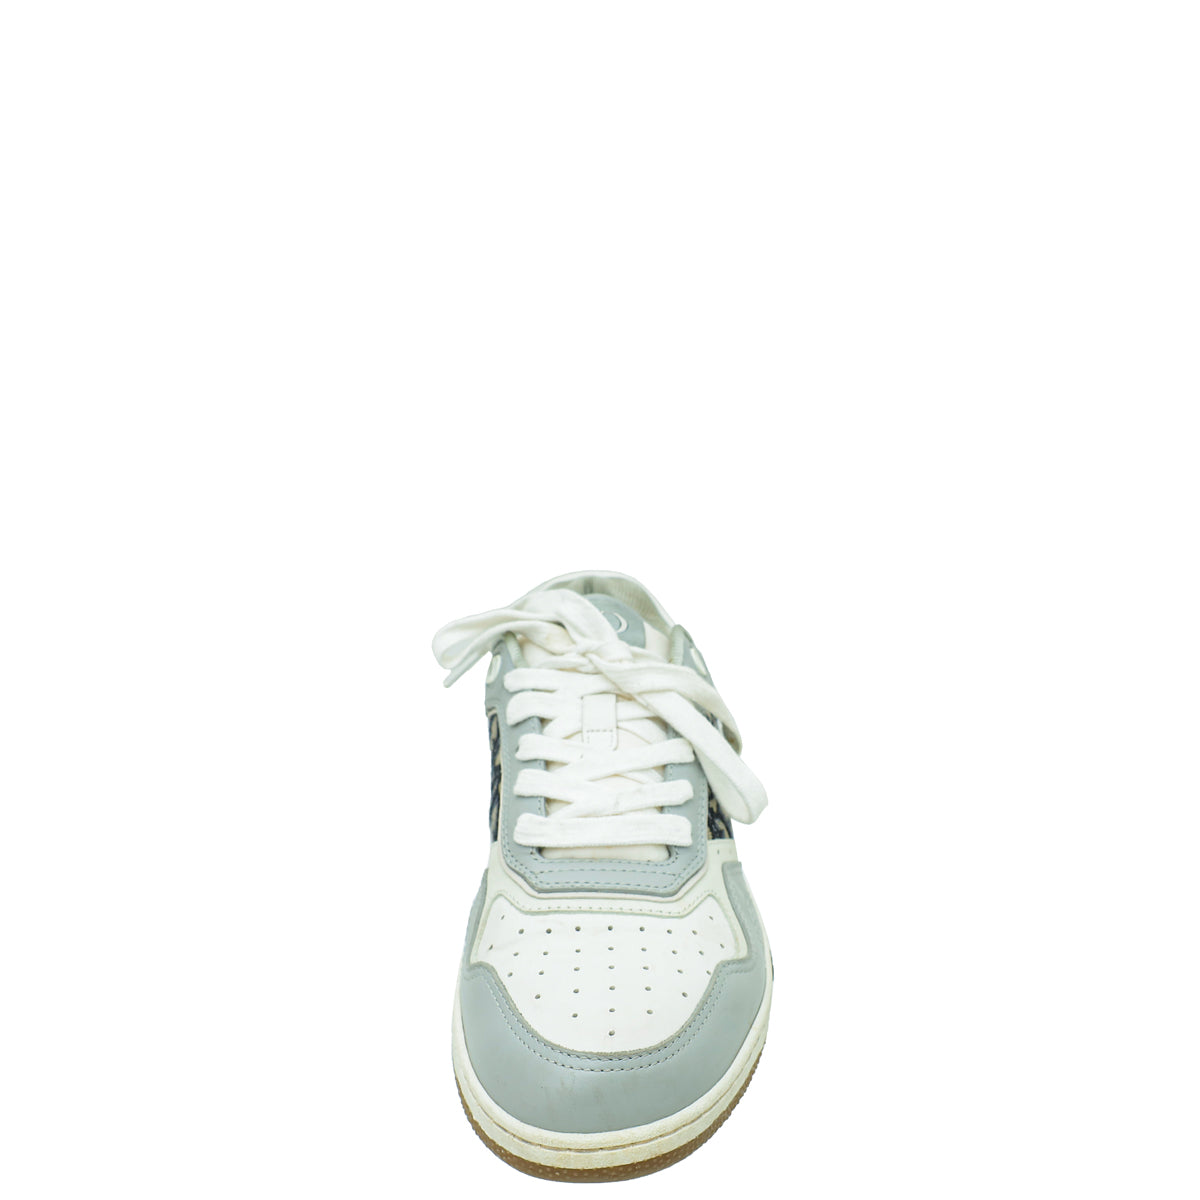 Christian Dior Tricolor B27 Oblique Galaxy Sneakers 39